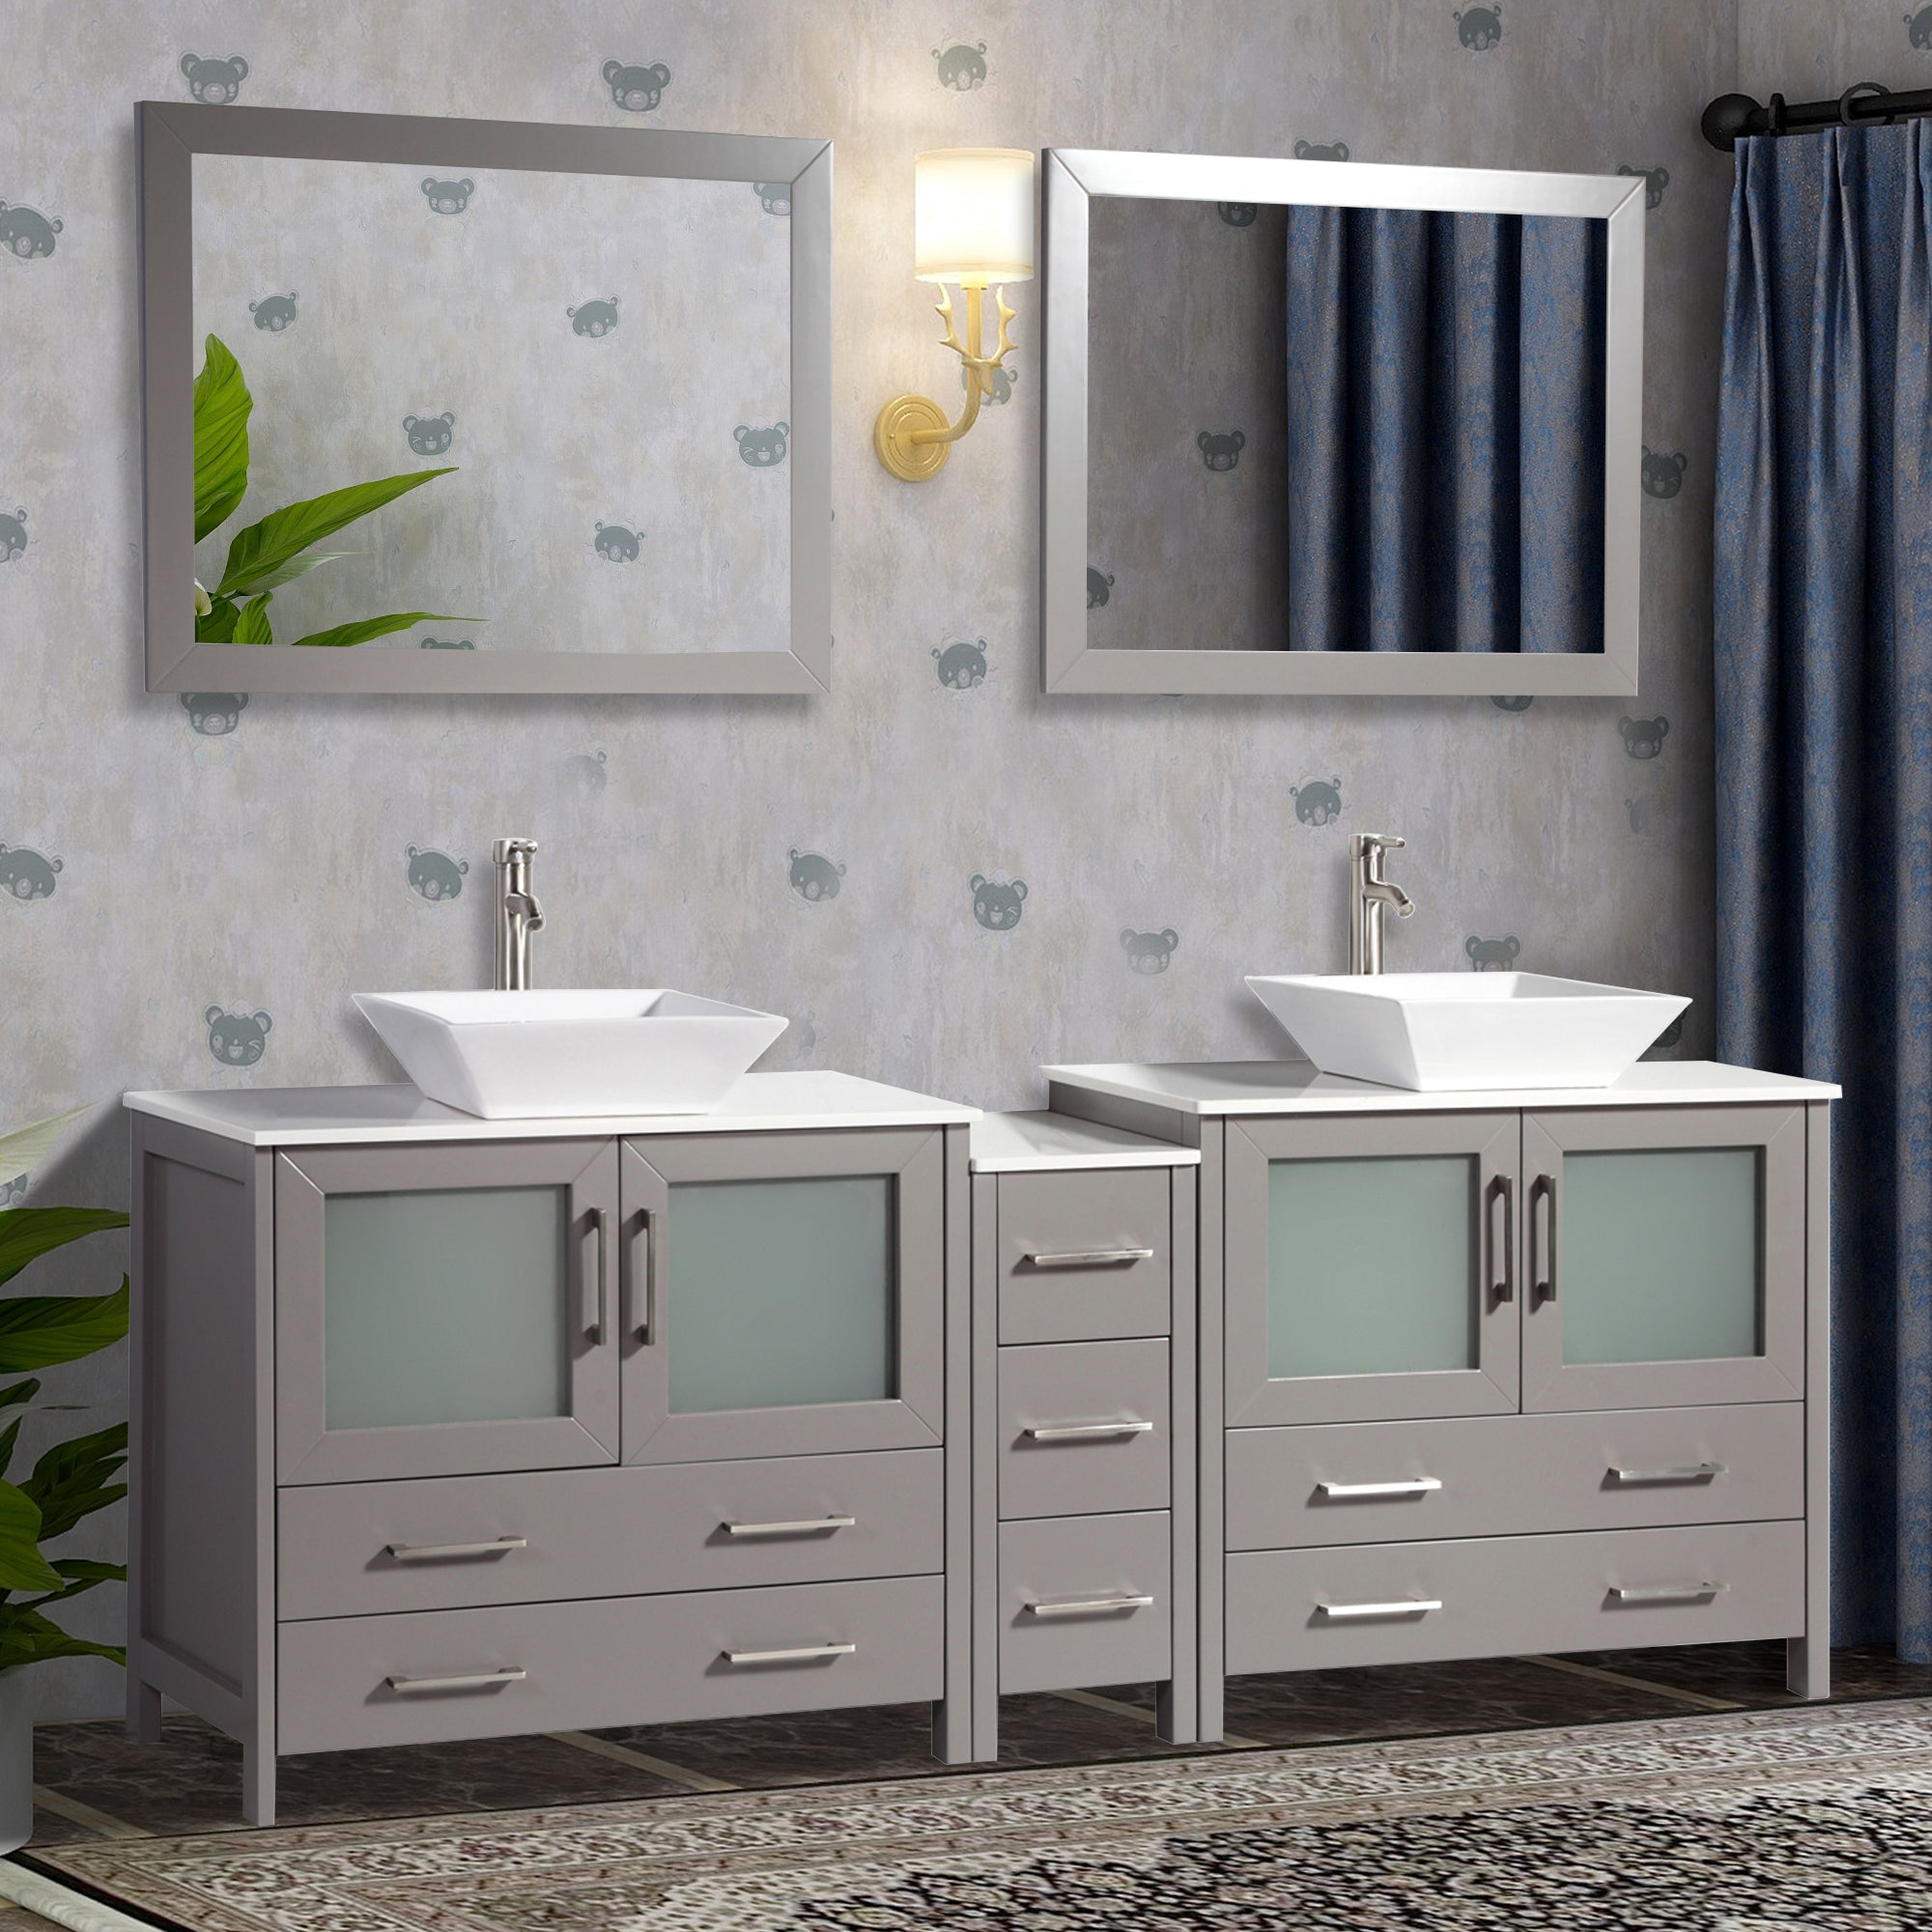 Vanity Art - Monaco 84" Double Vessel Sink Bathroom Vanity Set with Sinks and Mirrors - 1 Side Cabinet - Bhdepot 